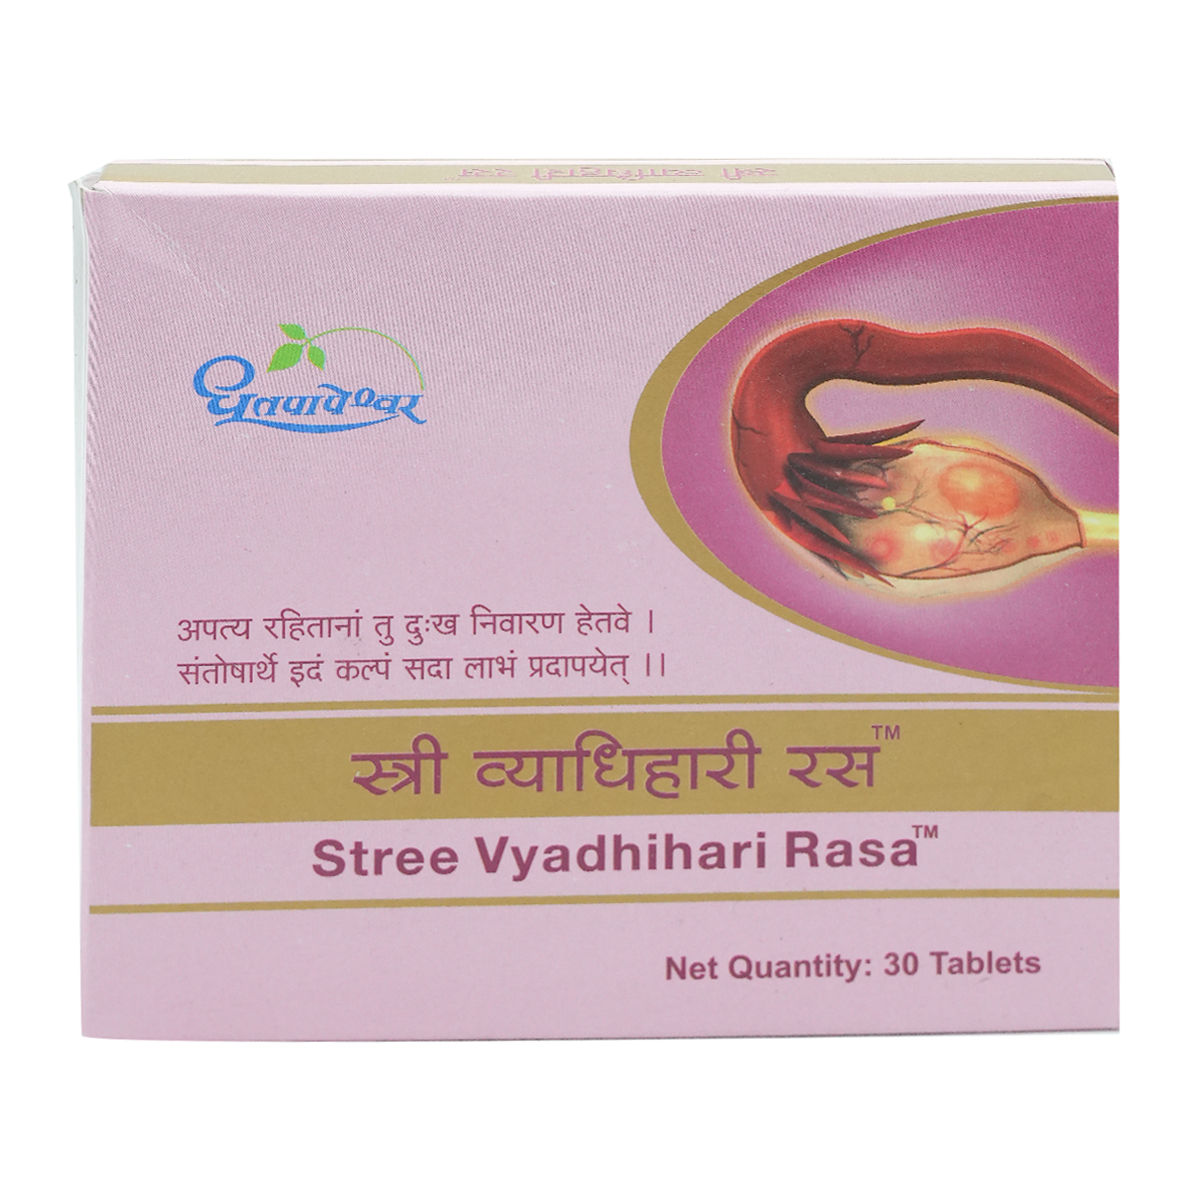 Dhootapapeshwar Stree Vyadhihari Rasa, 30 Tablets, Pack of 1 